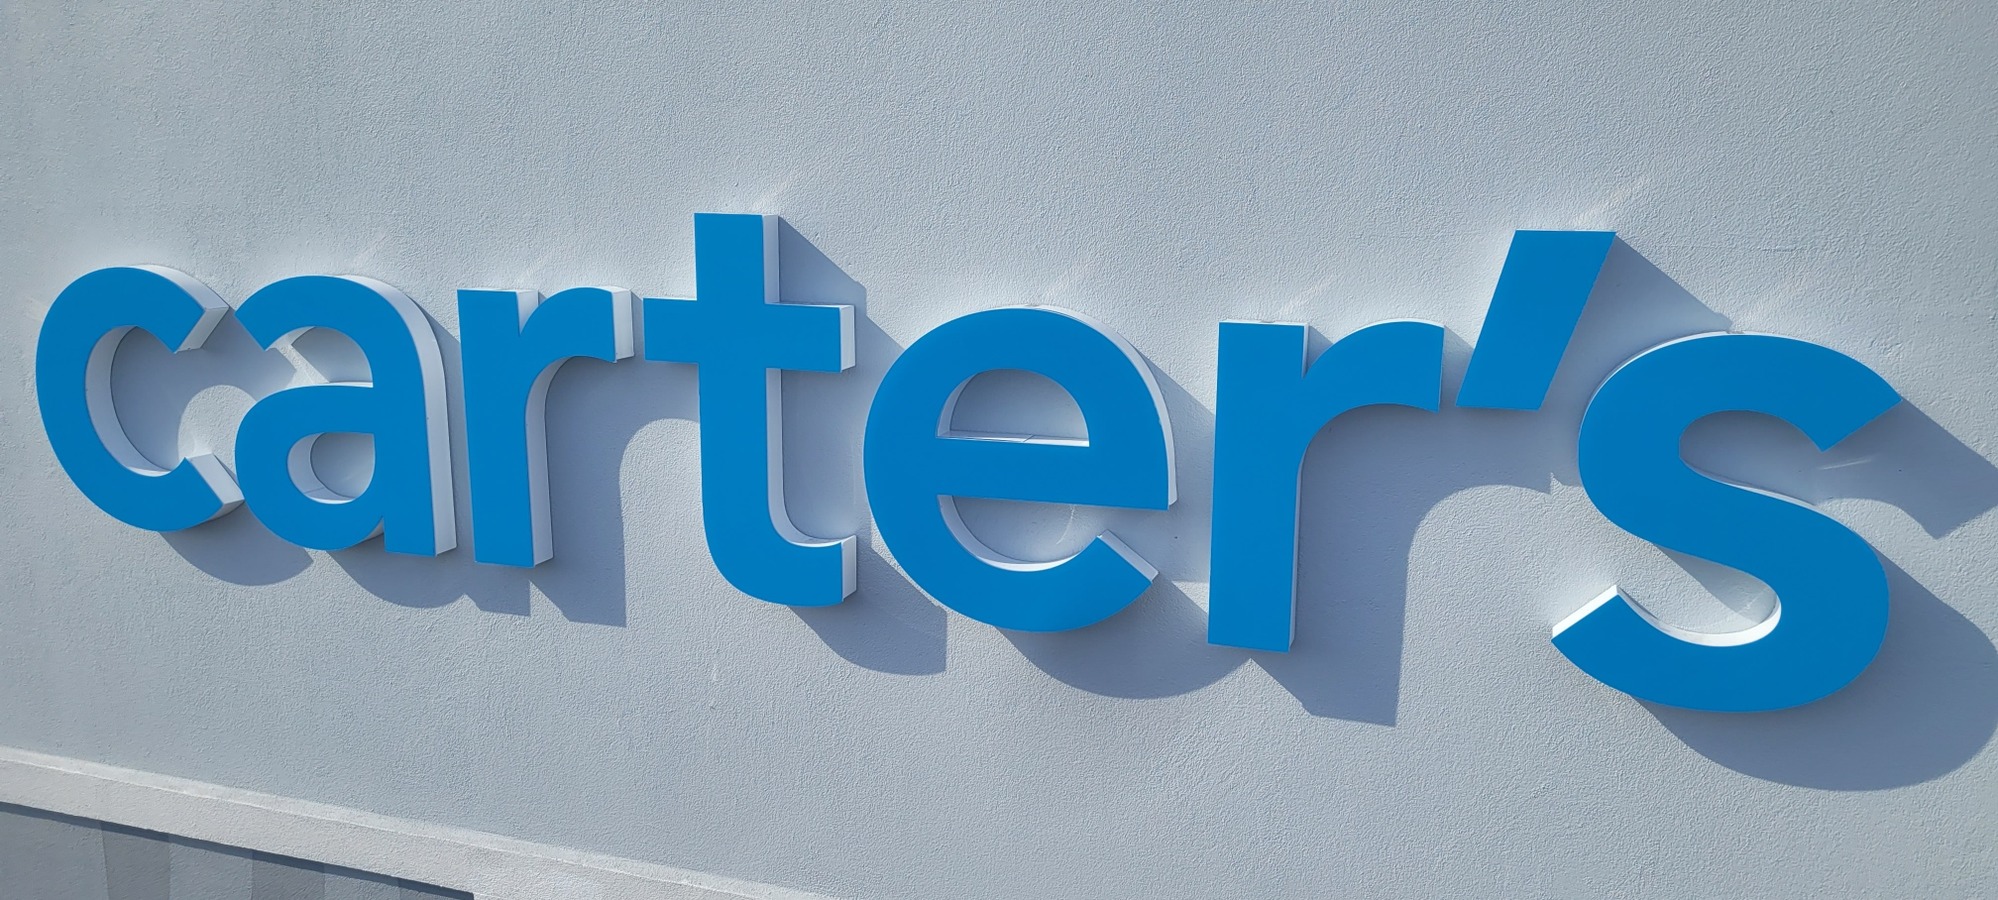 Dimensional letter sign of Carter's